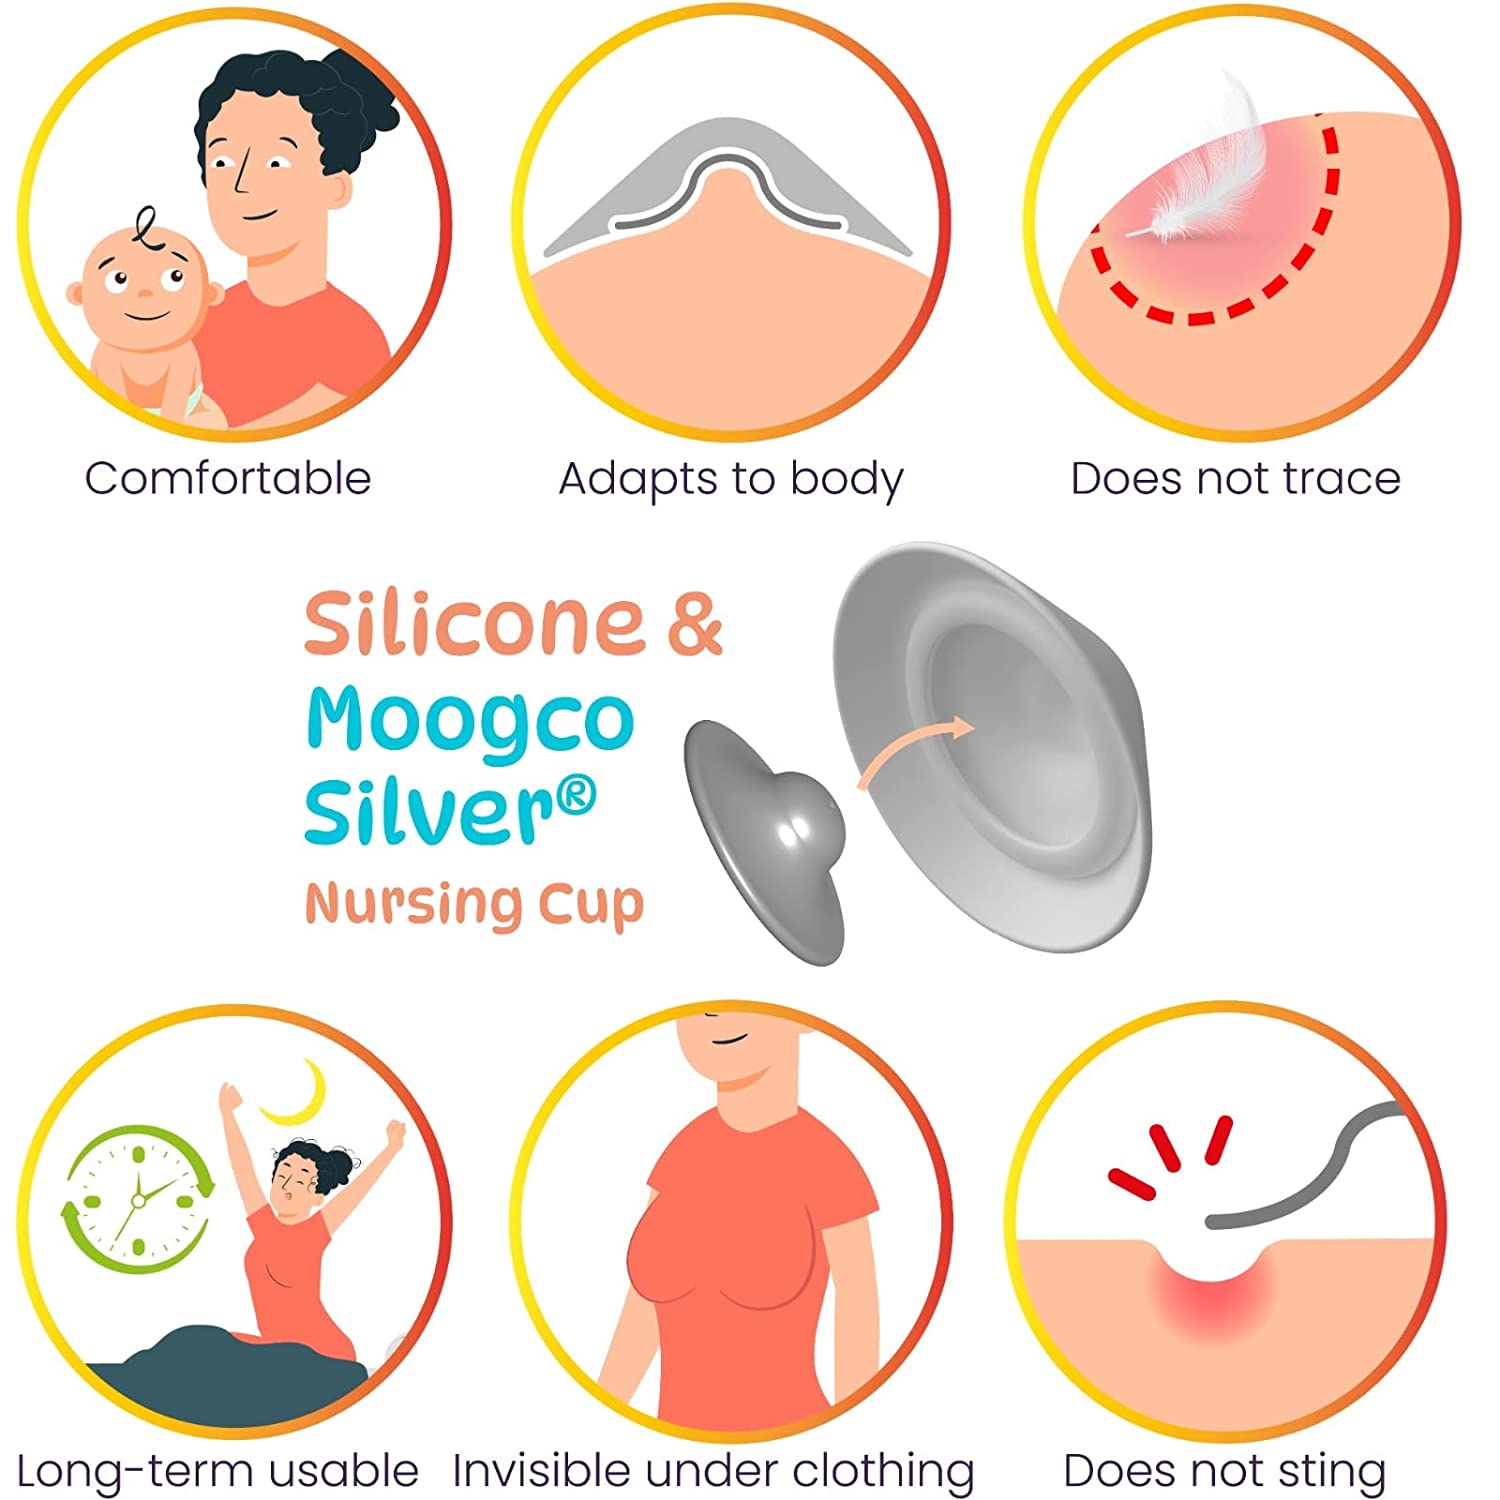 MamaBabyCo 999 Silver Nursing Cups - The Original Nipple Shields for  Nursing Newborn - Nipple Covers for Breastfeeding - Breastfeeding  Essentials 